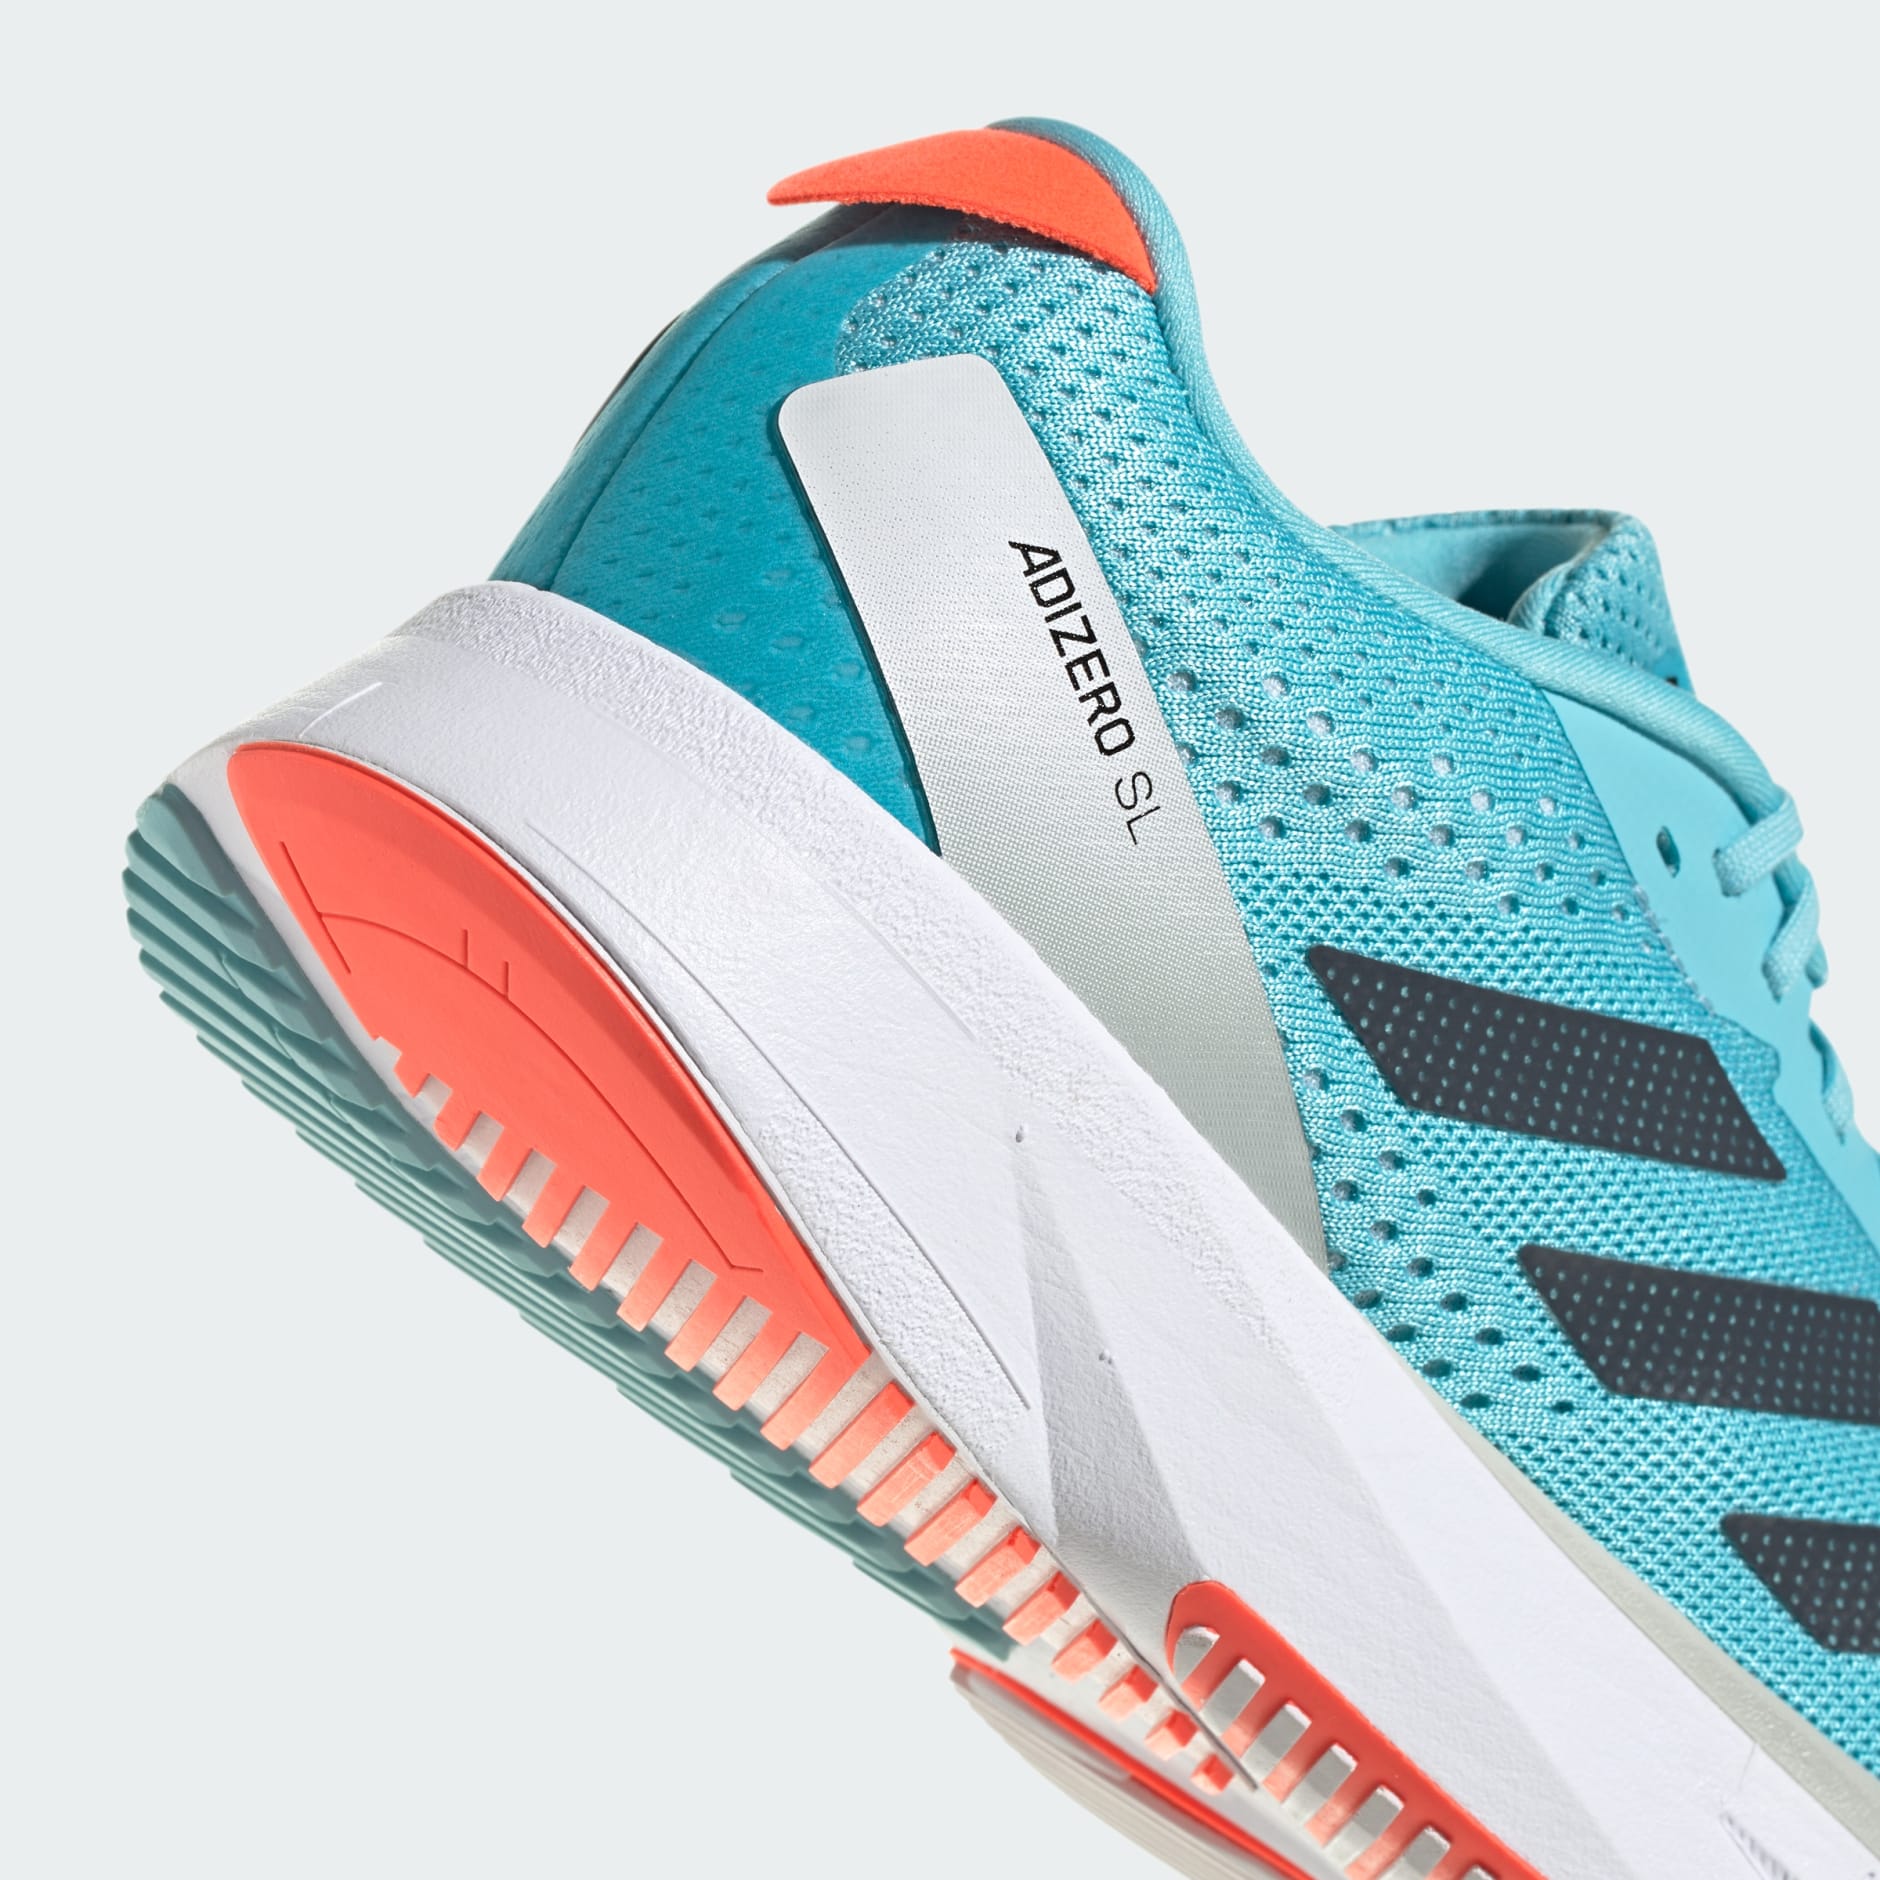 adidas adizero SL Women's Running Shoes - Light Aqua/Carbon